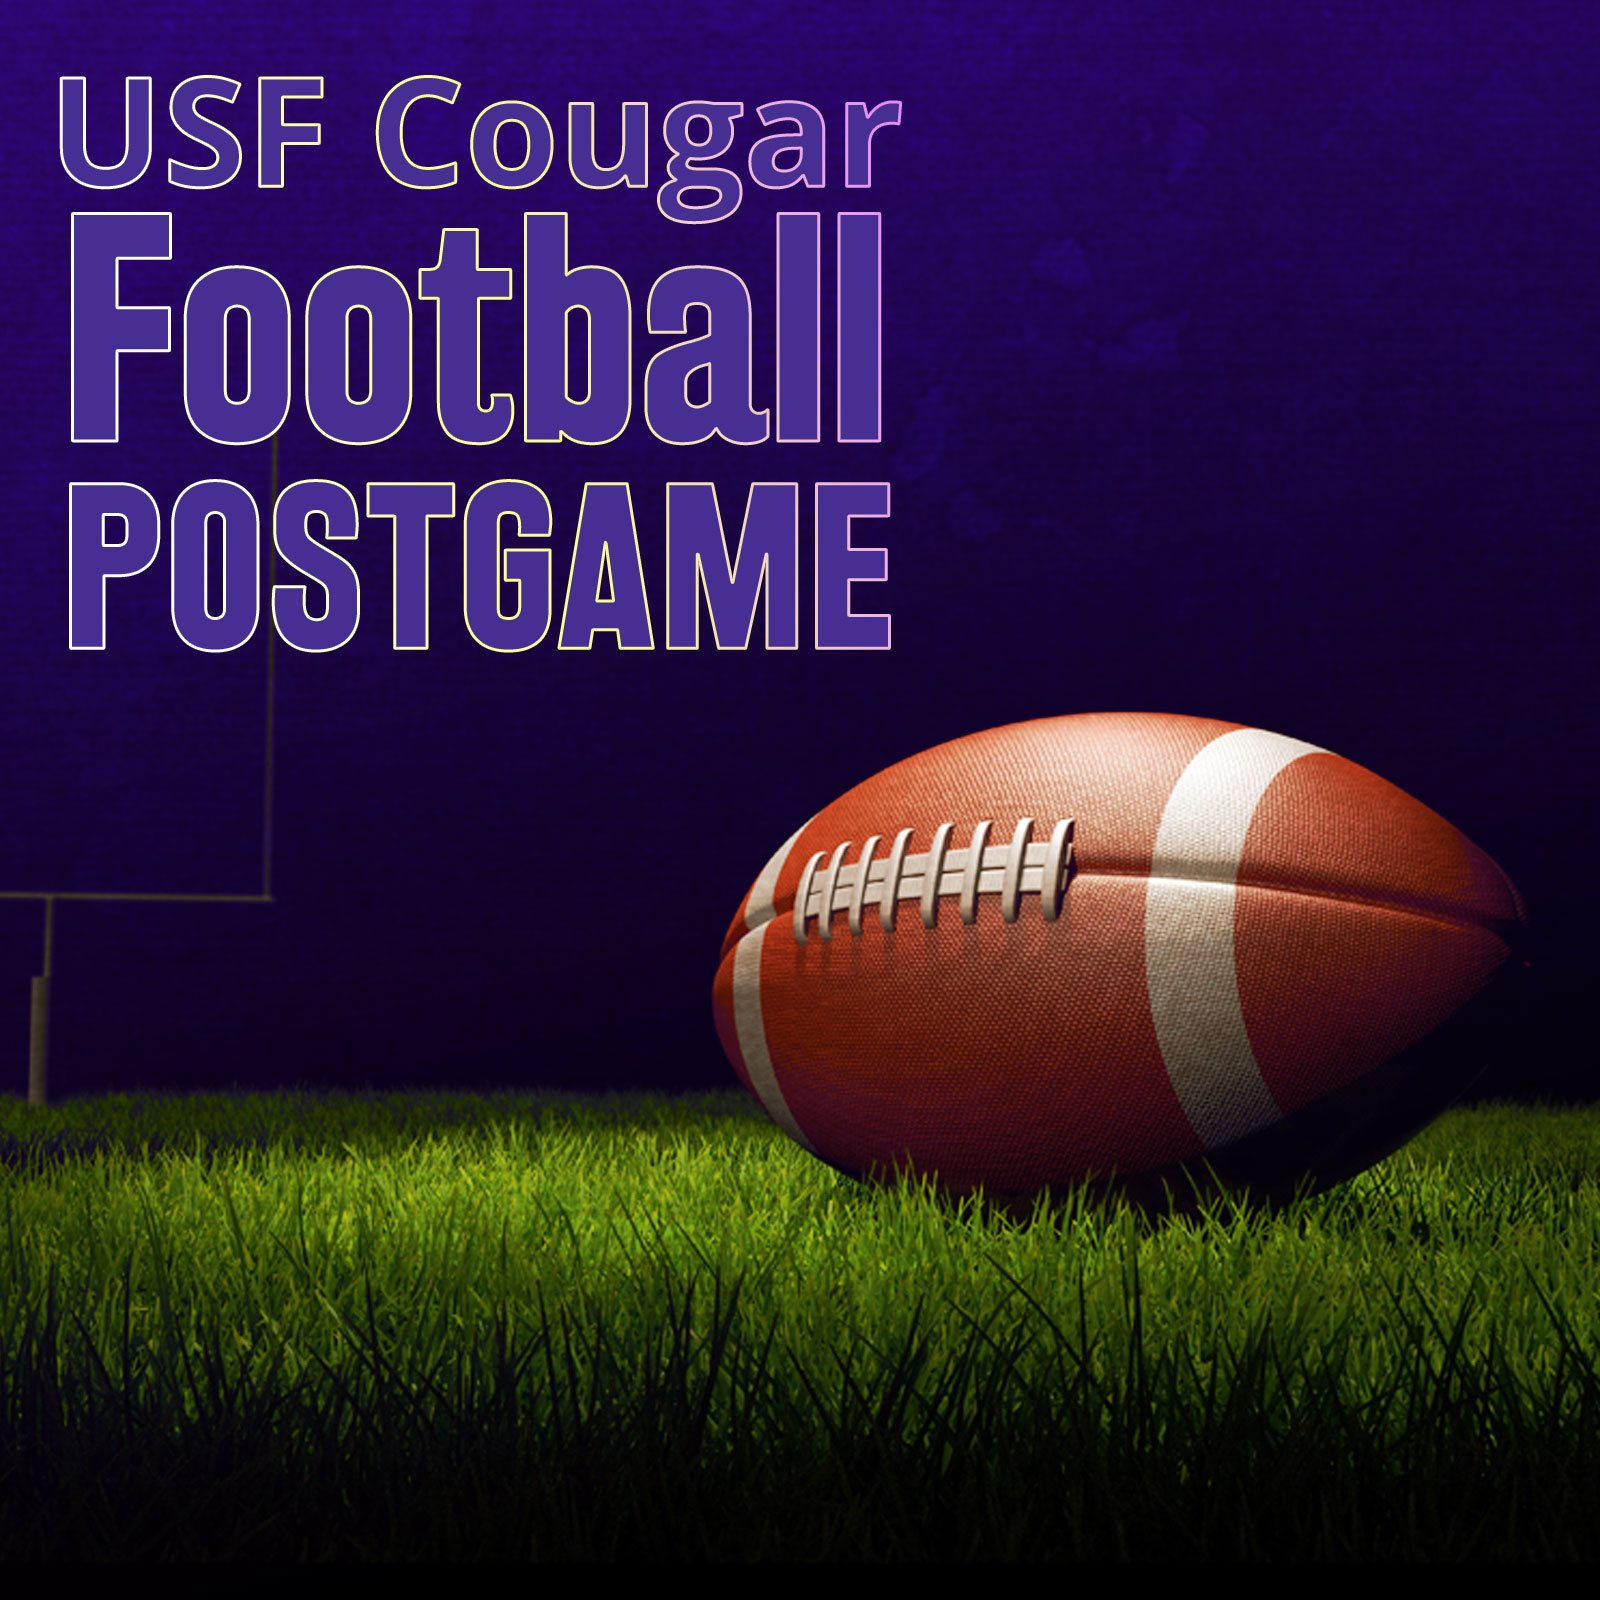 USF Cougar Football Postgame